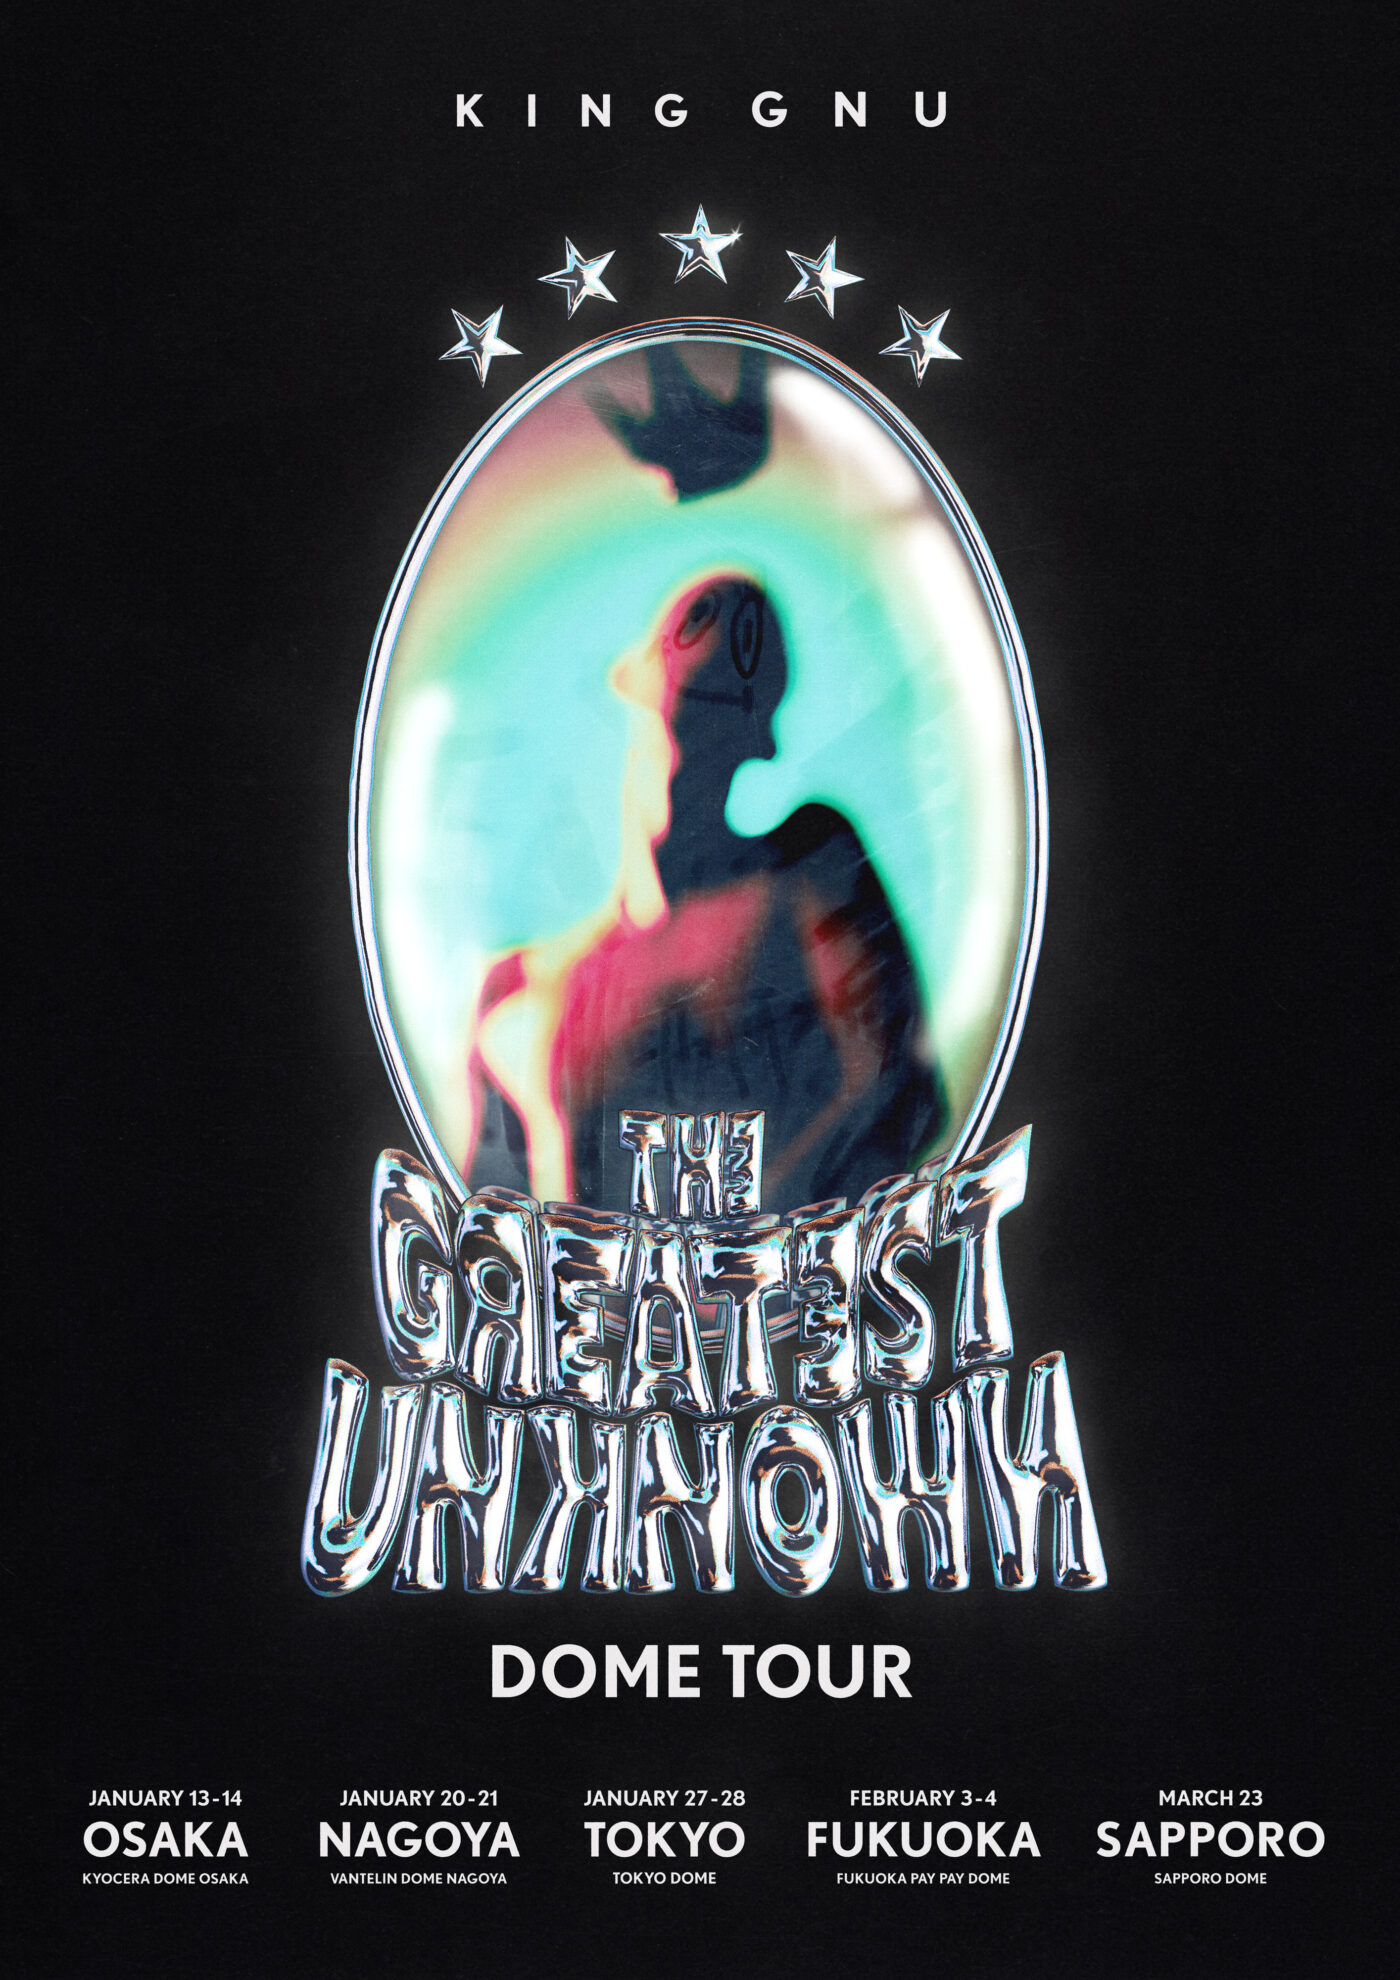 King Gnu Dome Tour「THE GREATEST UNKNOWN」物販整理券 オフィシャル